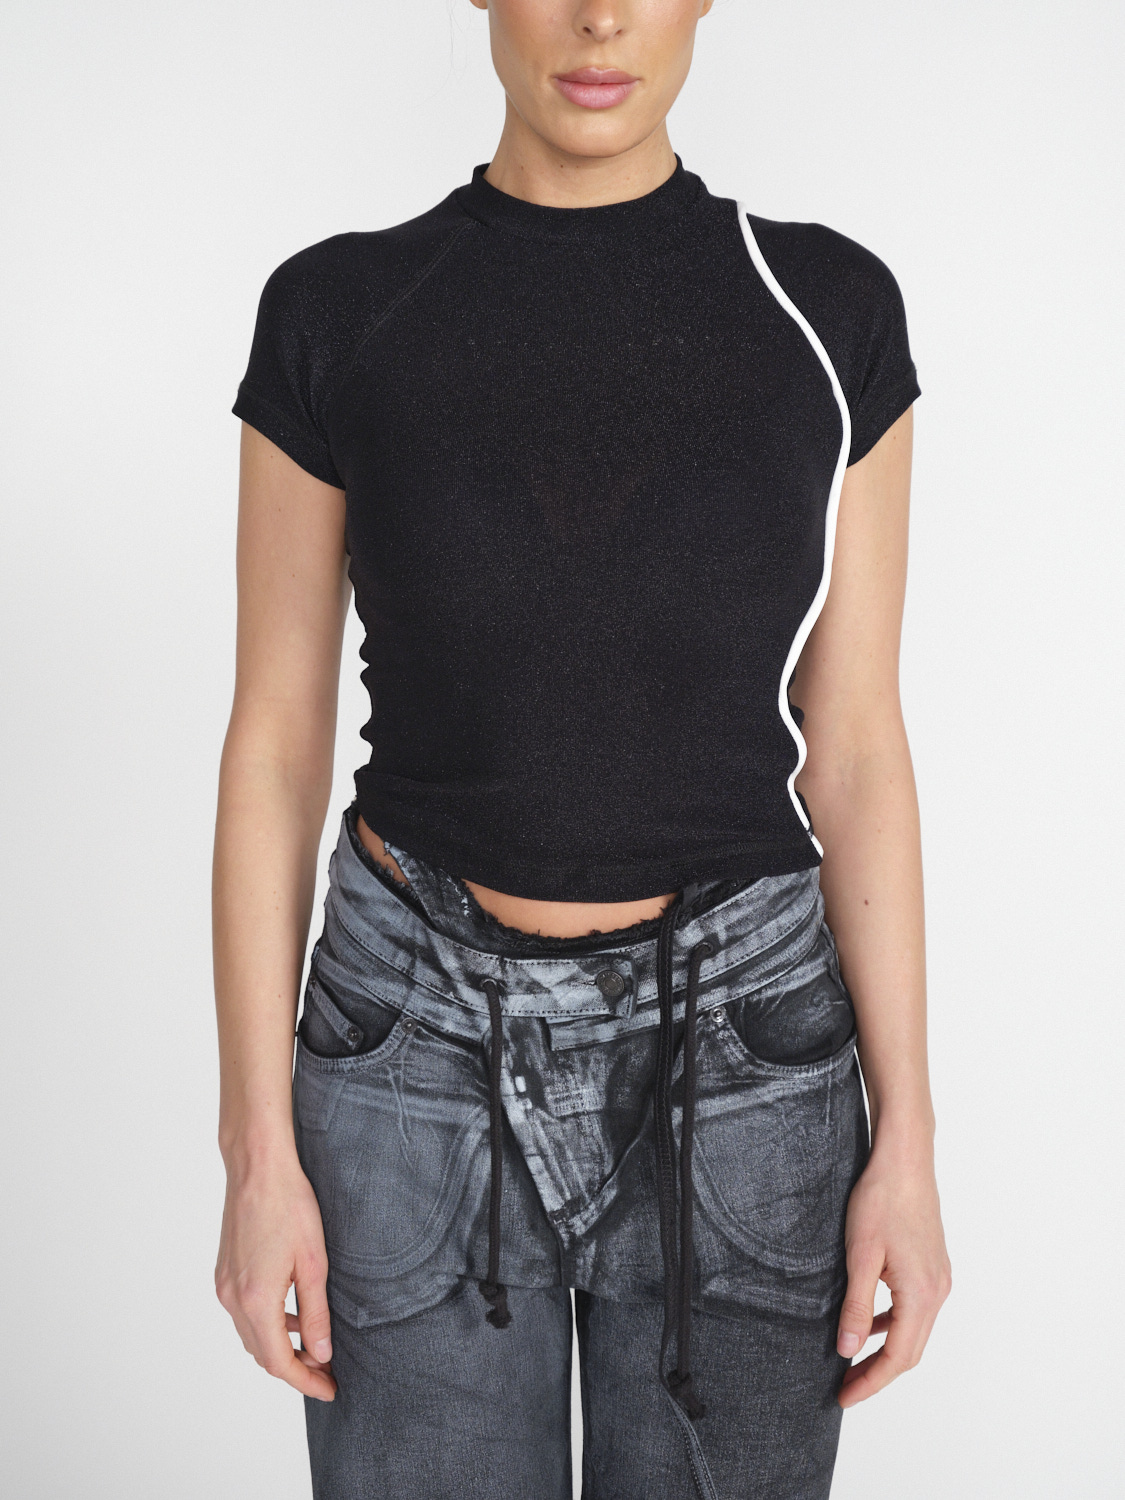 Ottolinger Lurex Shirt - Stretchy shirt with lurex details  black XS